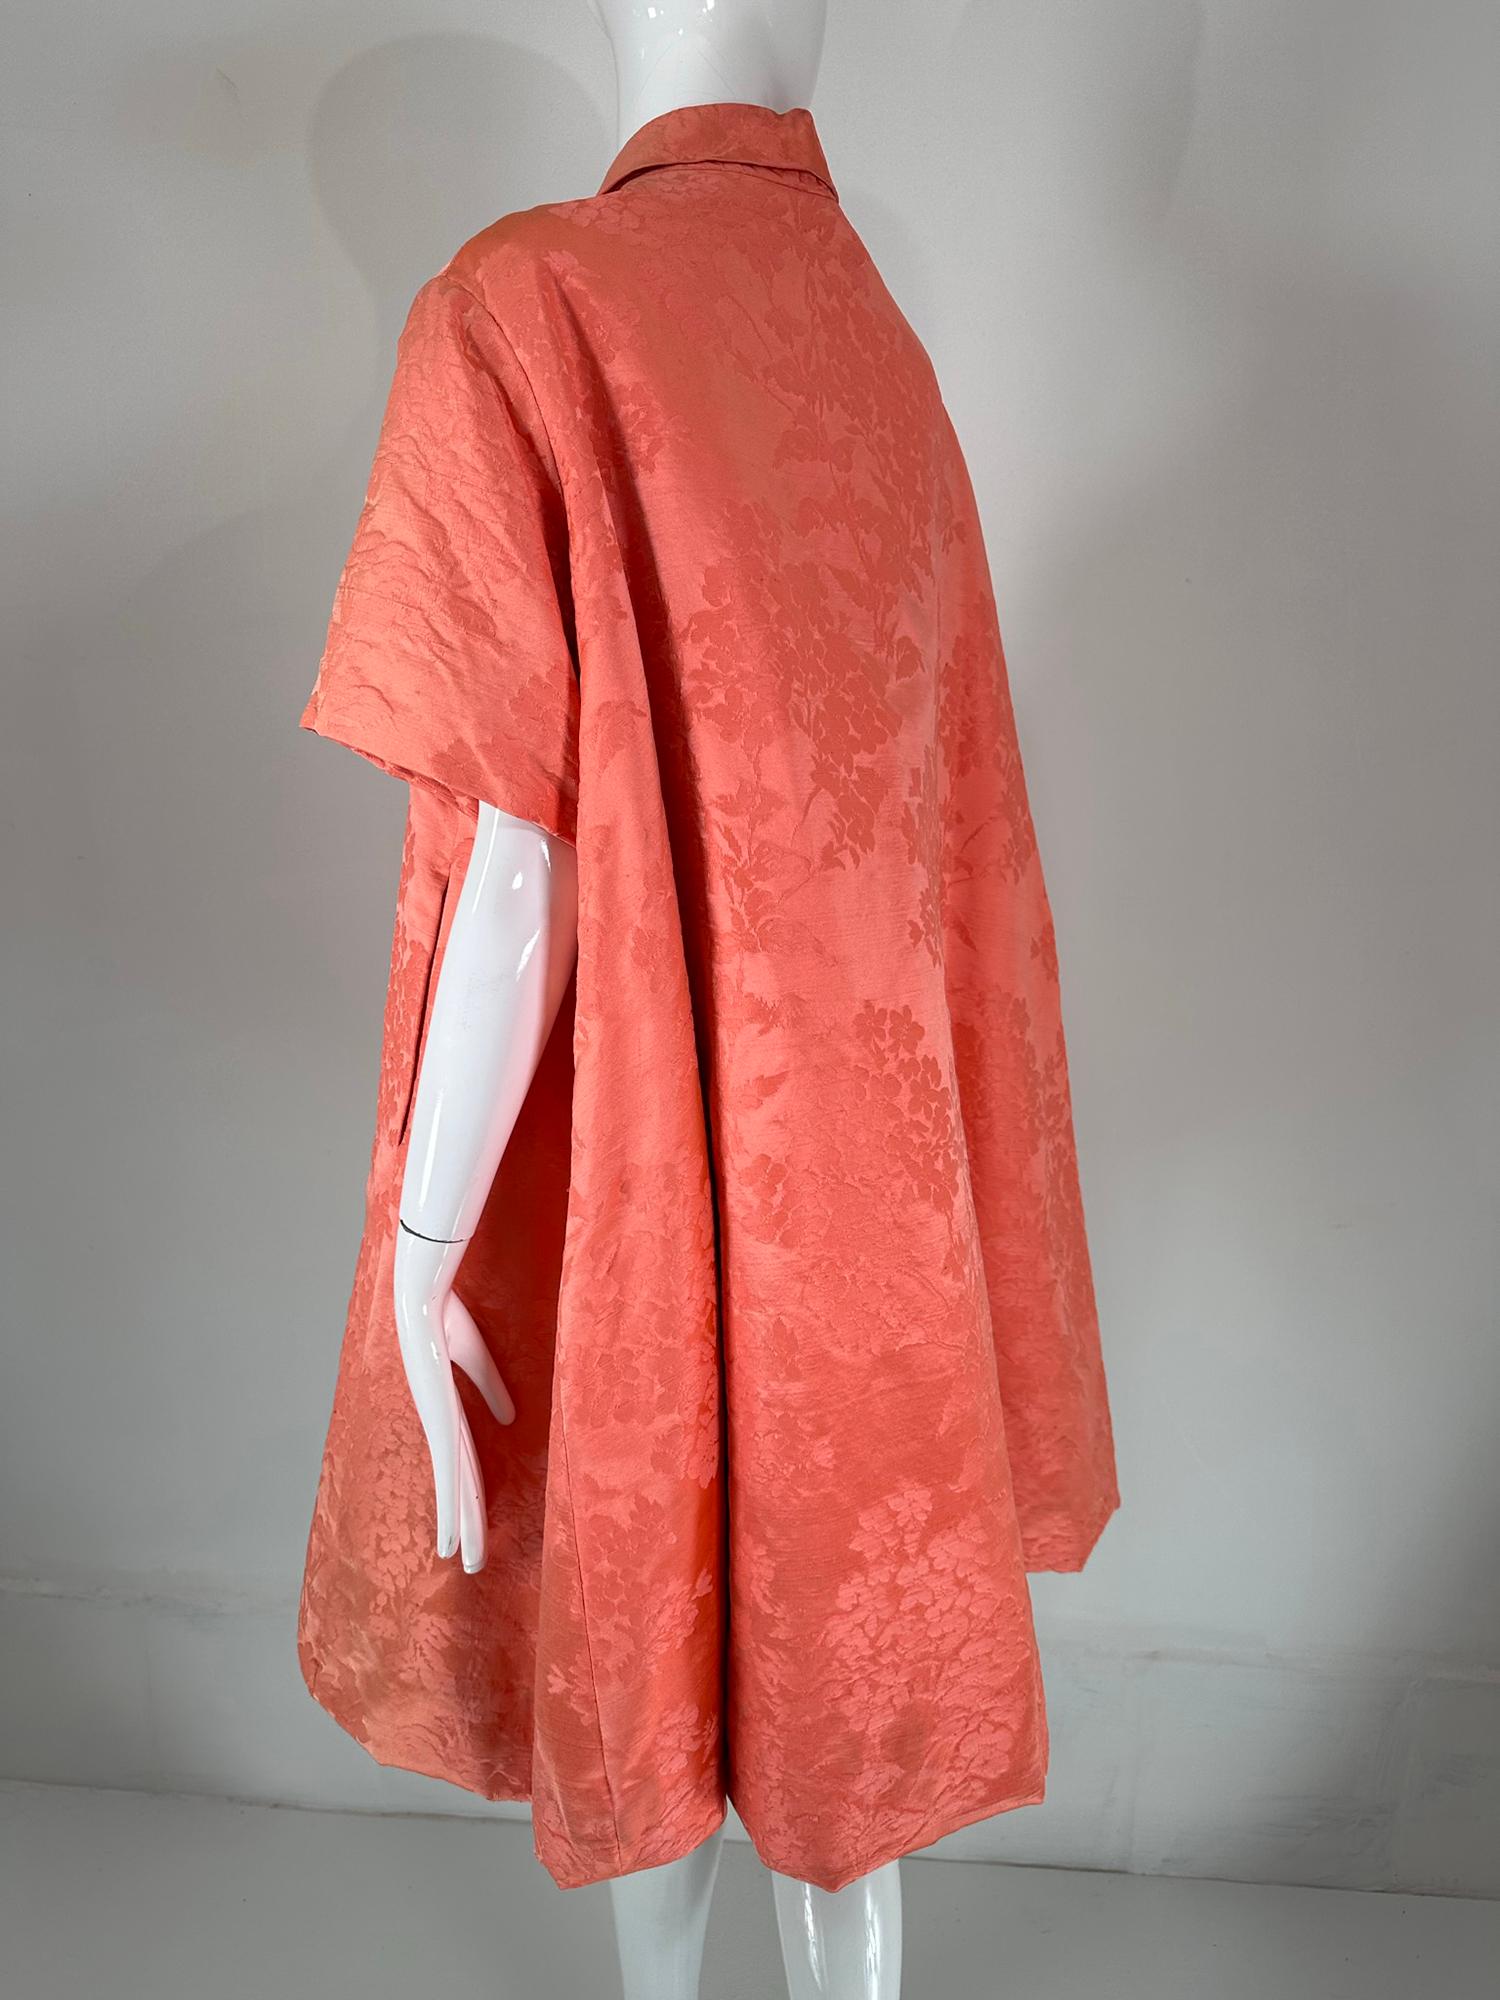 Lanvin Castello Haute Couture Coral Silk Brocade Coat & Dress Ensemble 1950s For Sale 5